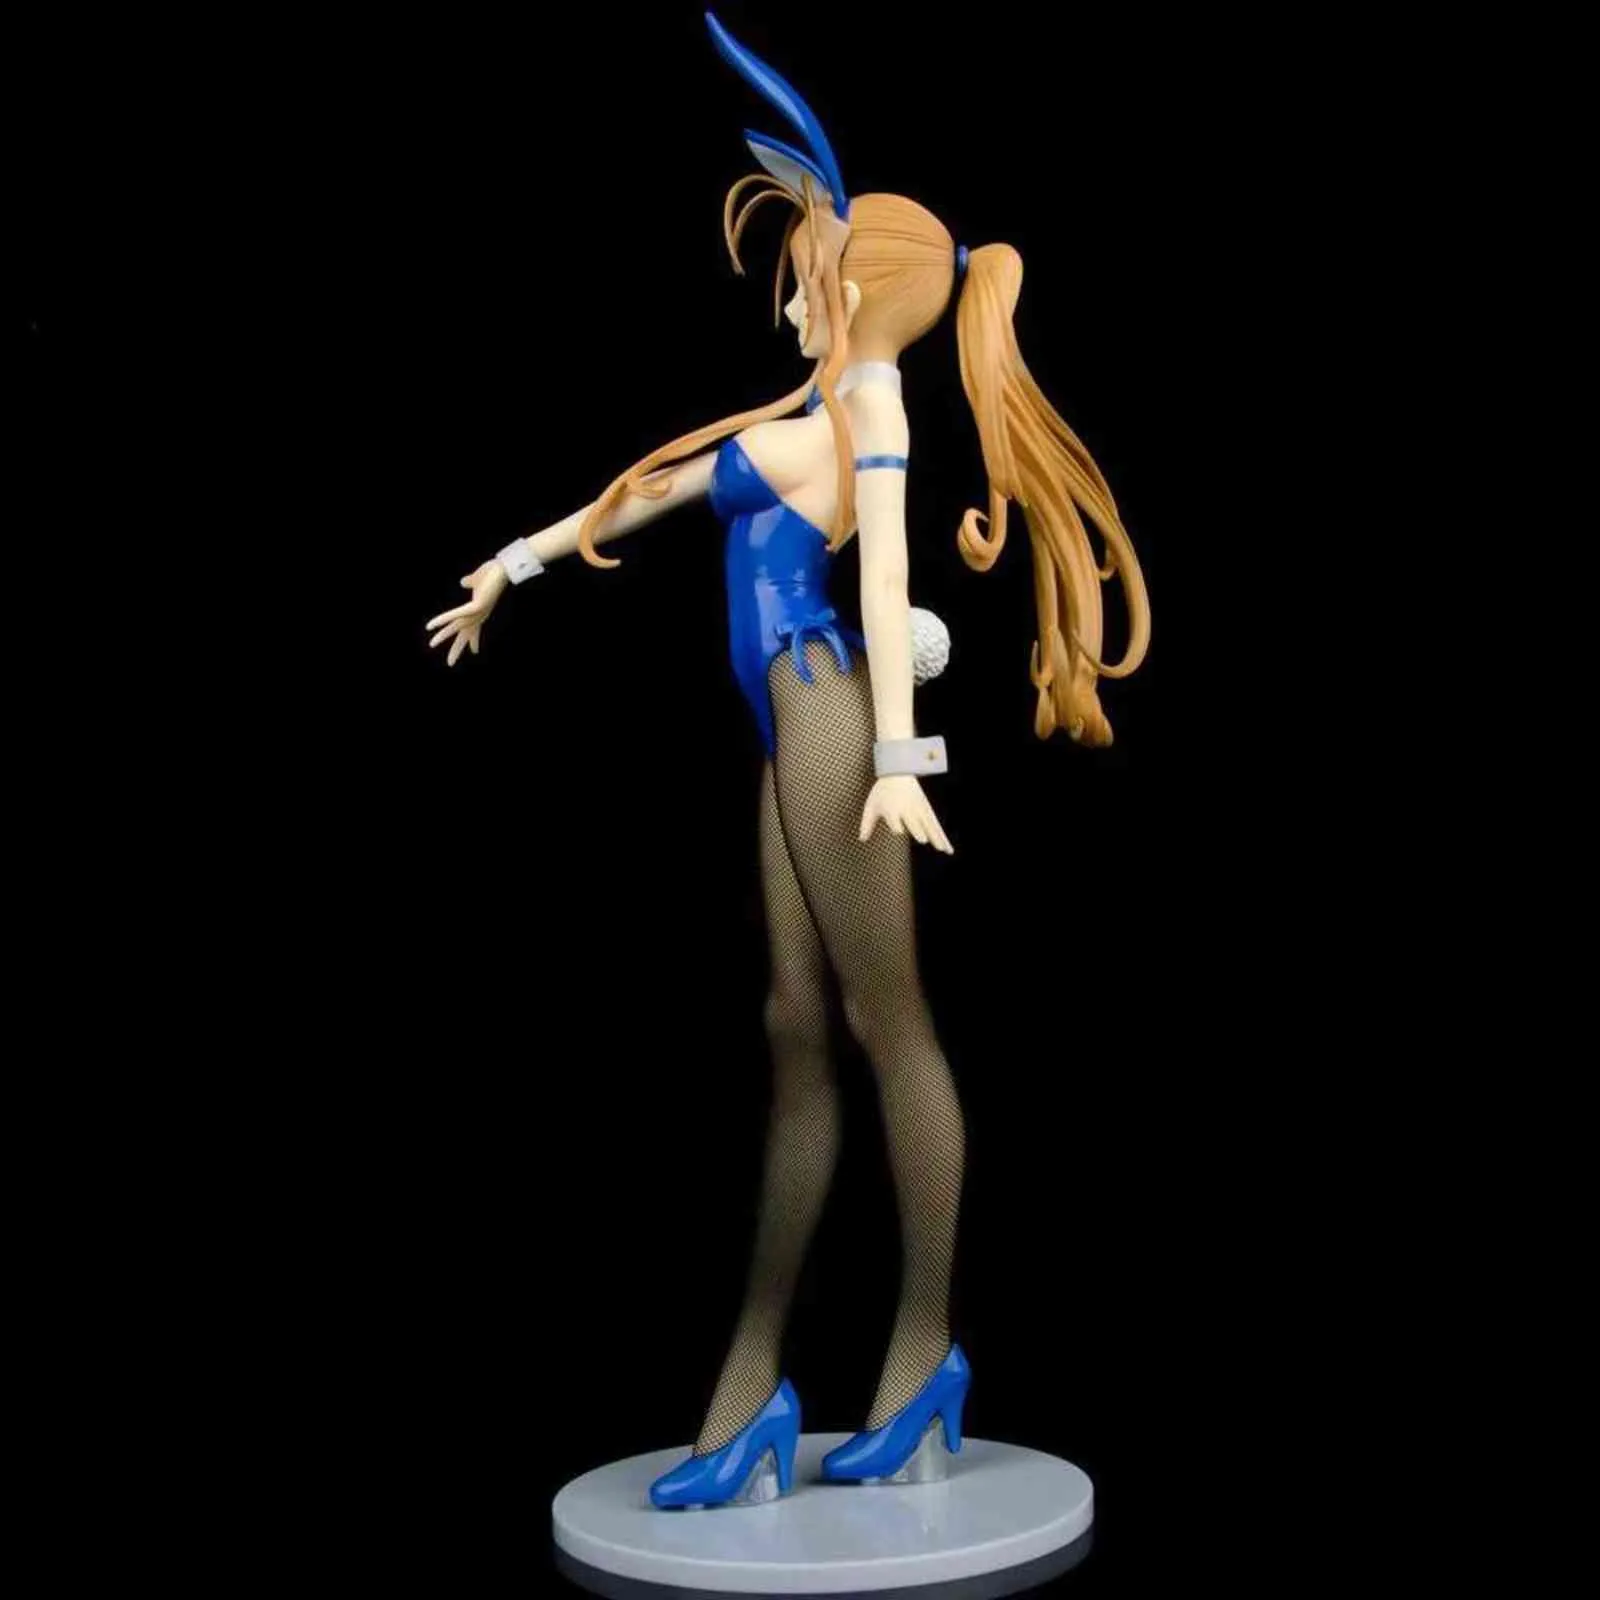 42 cm 14 Scala ing Bstyle Anime Oh My Dea Belldandy Bunny Girl Pvc Action Figure Toy Toy Adult Collection Regali della bambola modello H14610317